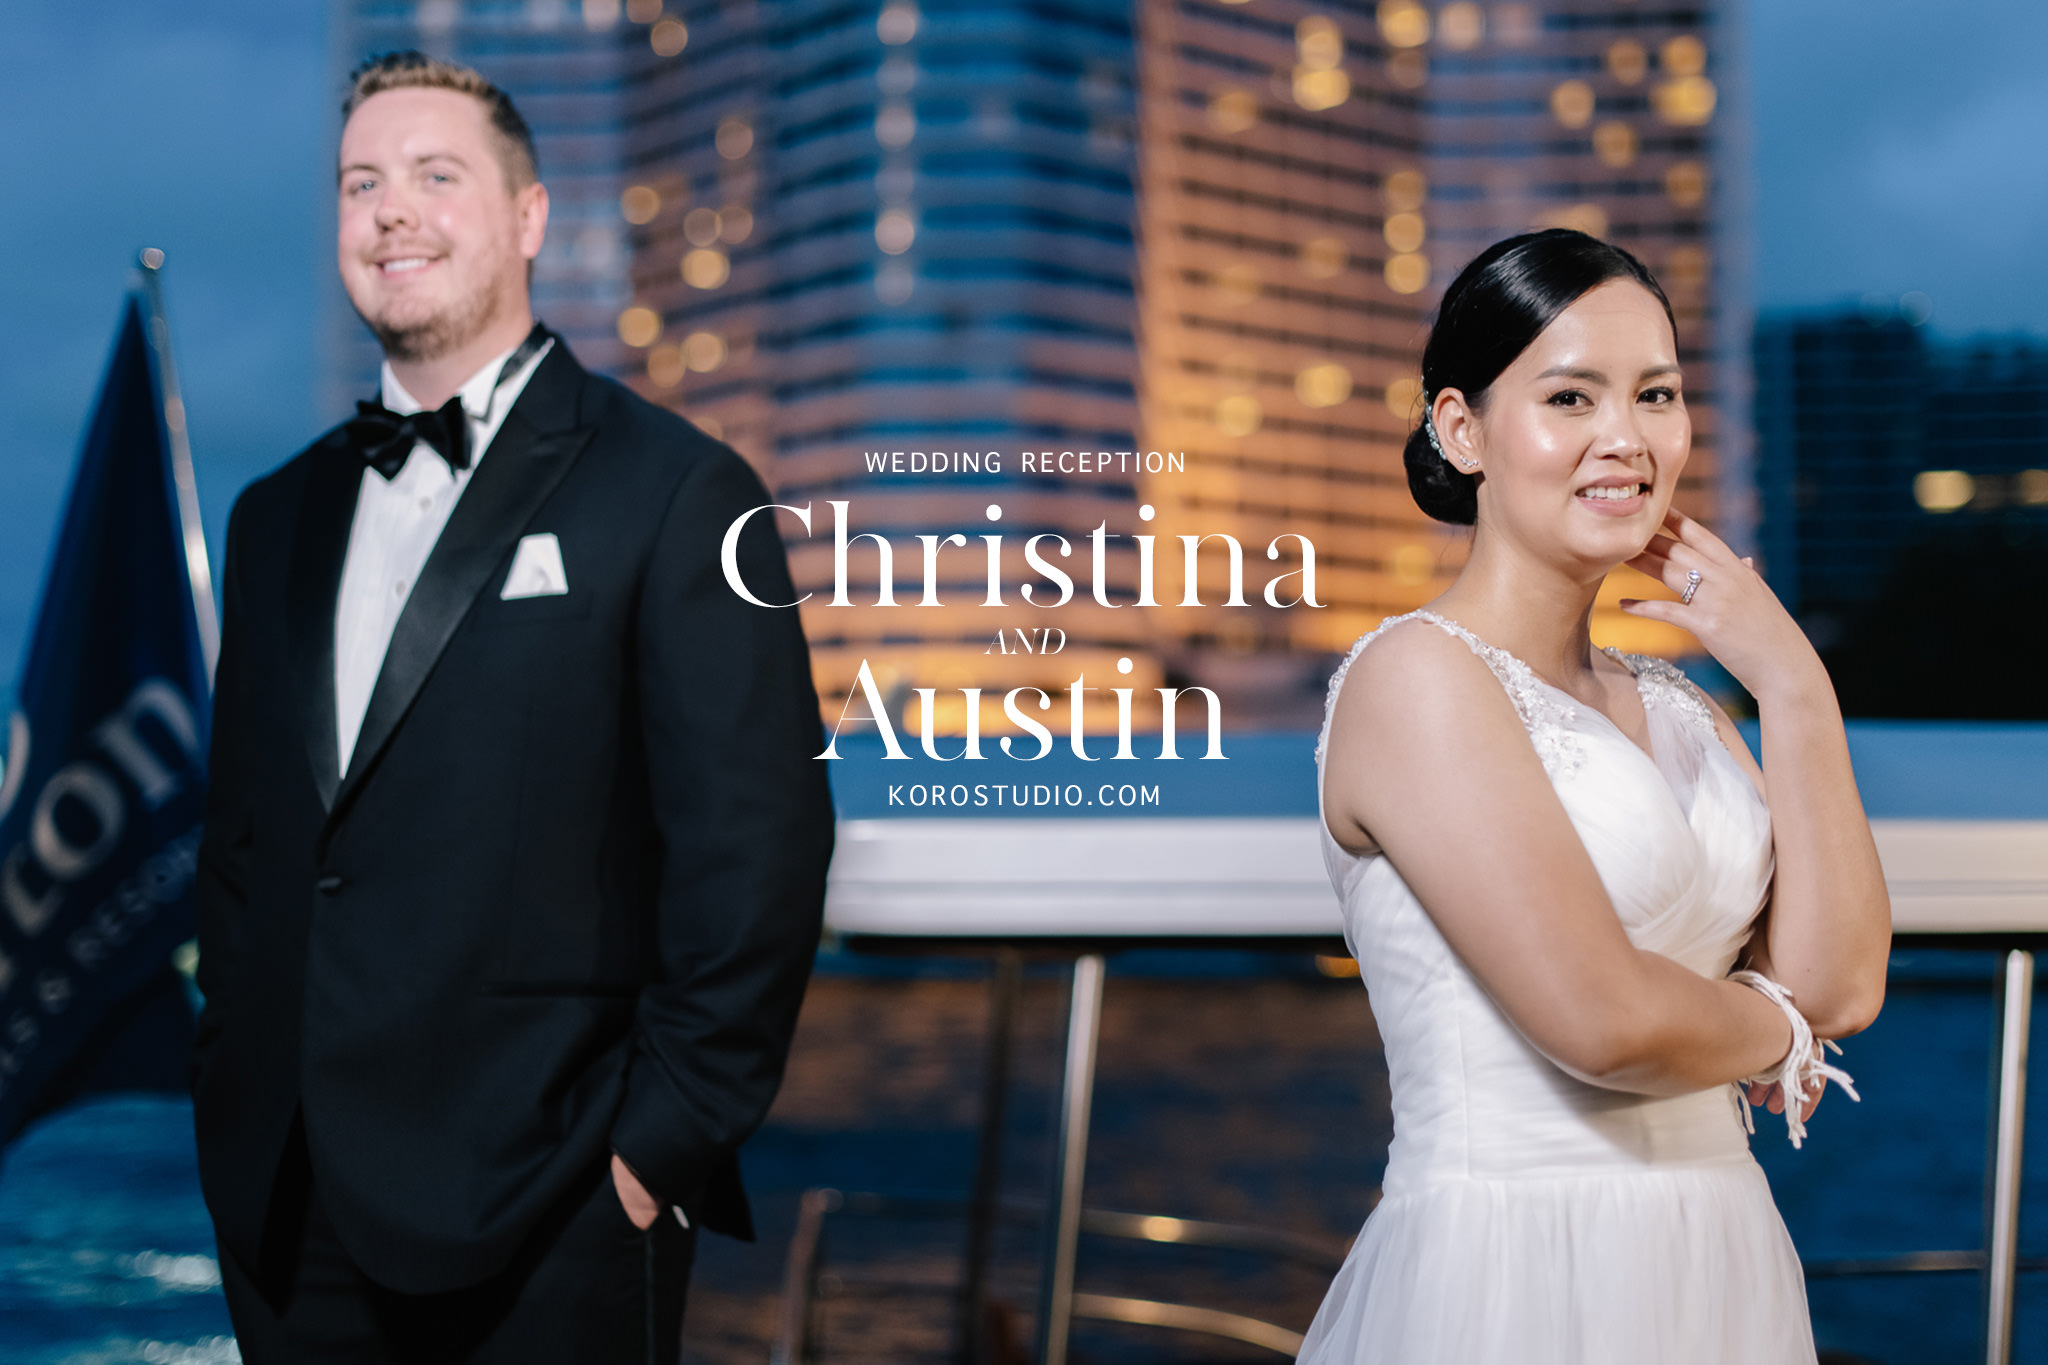 cruise weddings in bangkok on chaophraya river cover website Cruise Wedding in Bangkok Thailand on Chao Phraya River